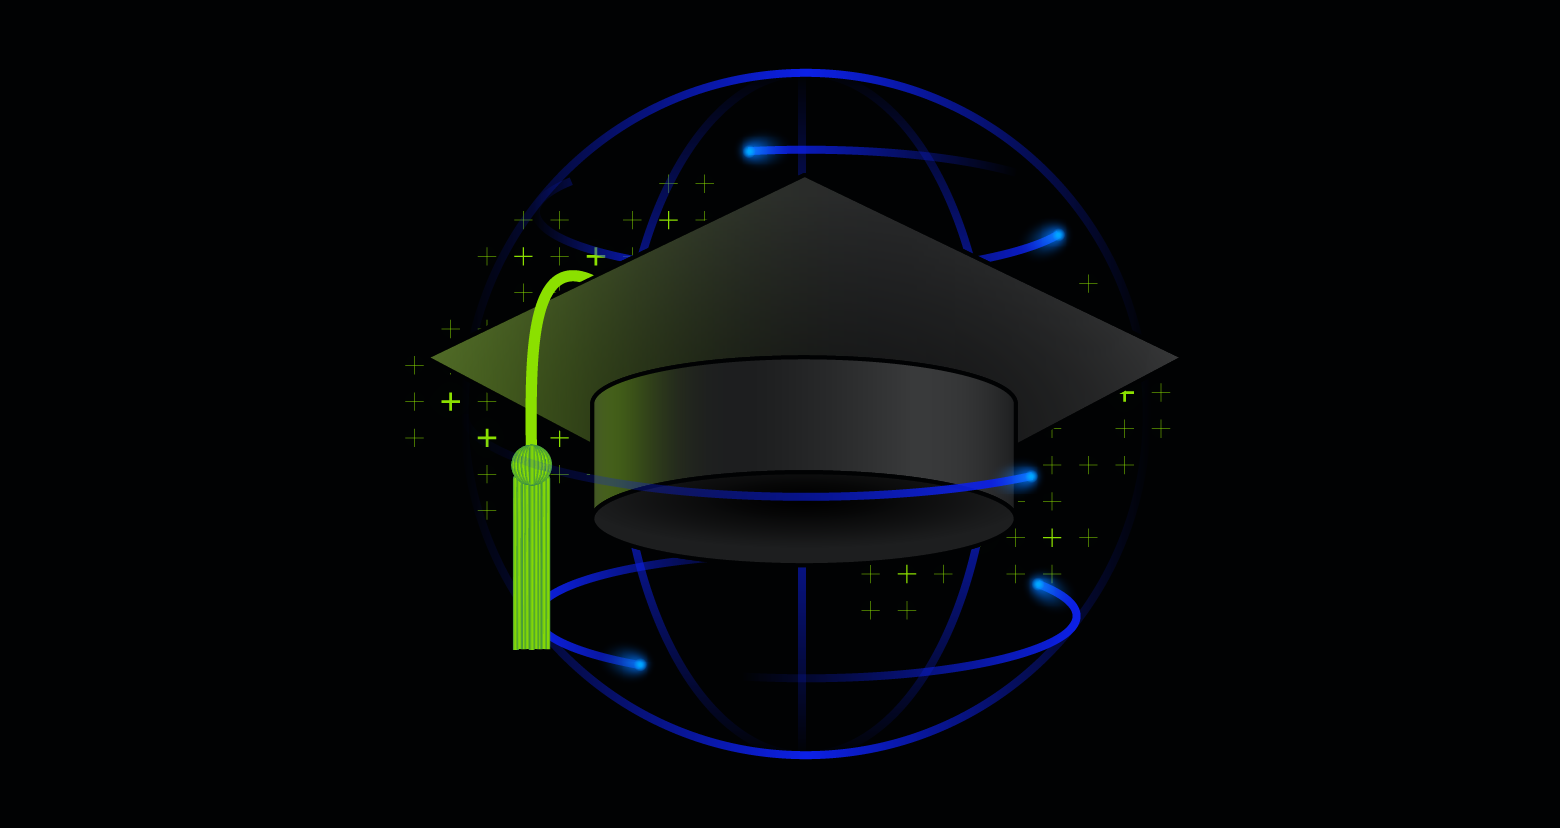 graduation cap for schools with Varonis branding, data security